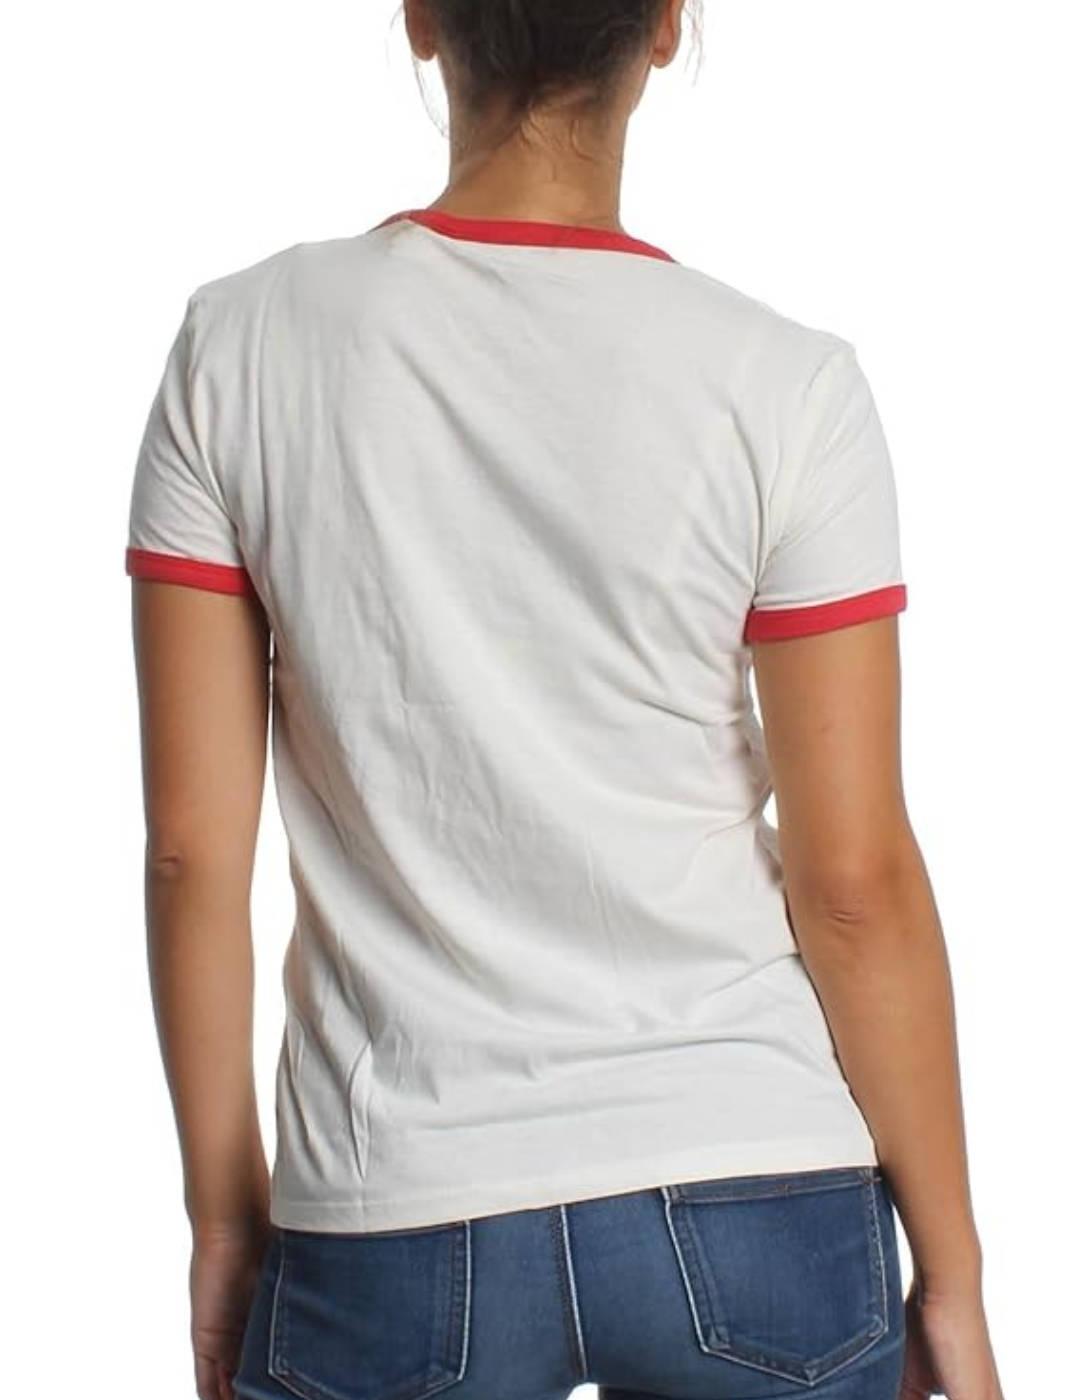 Camiseta Levi´s Perfect Ringer blanco y rojo para mujer